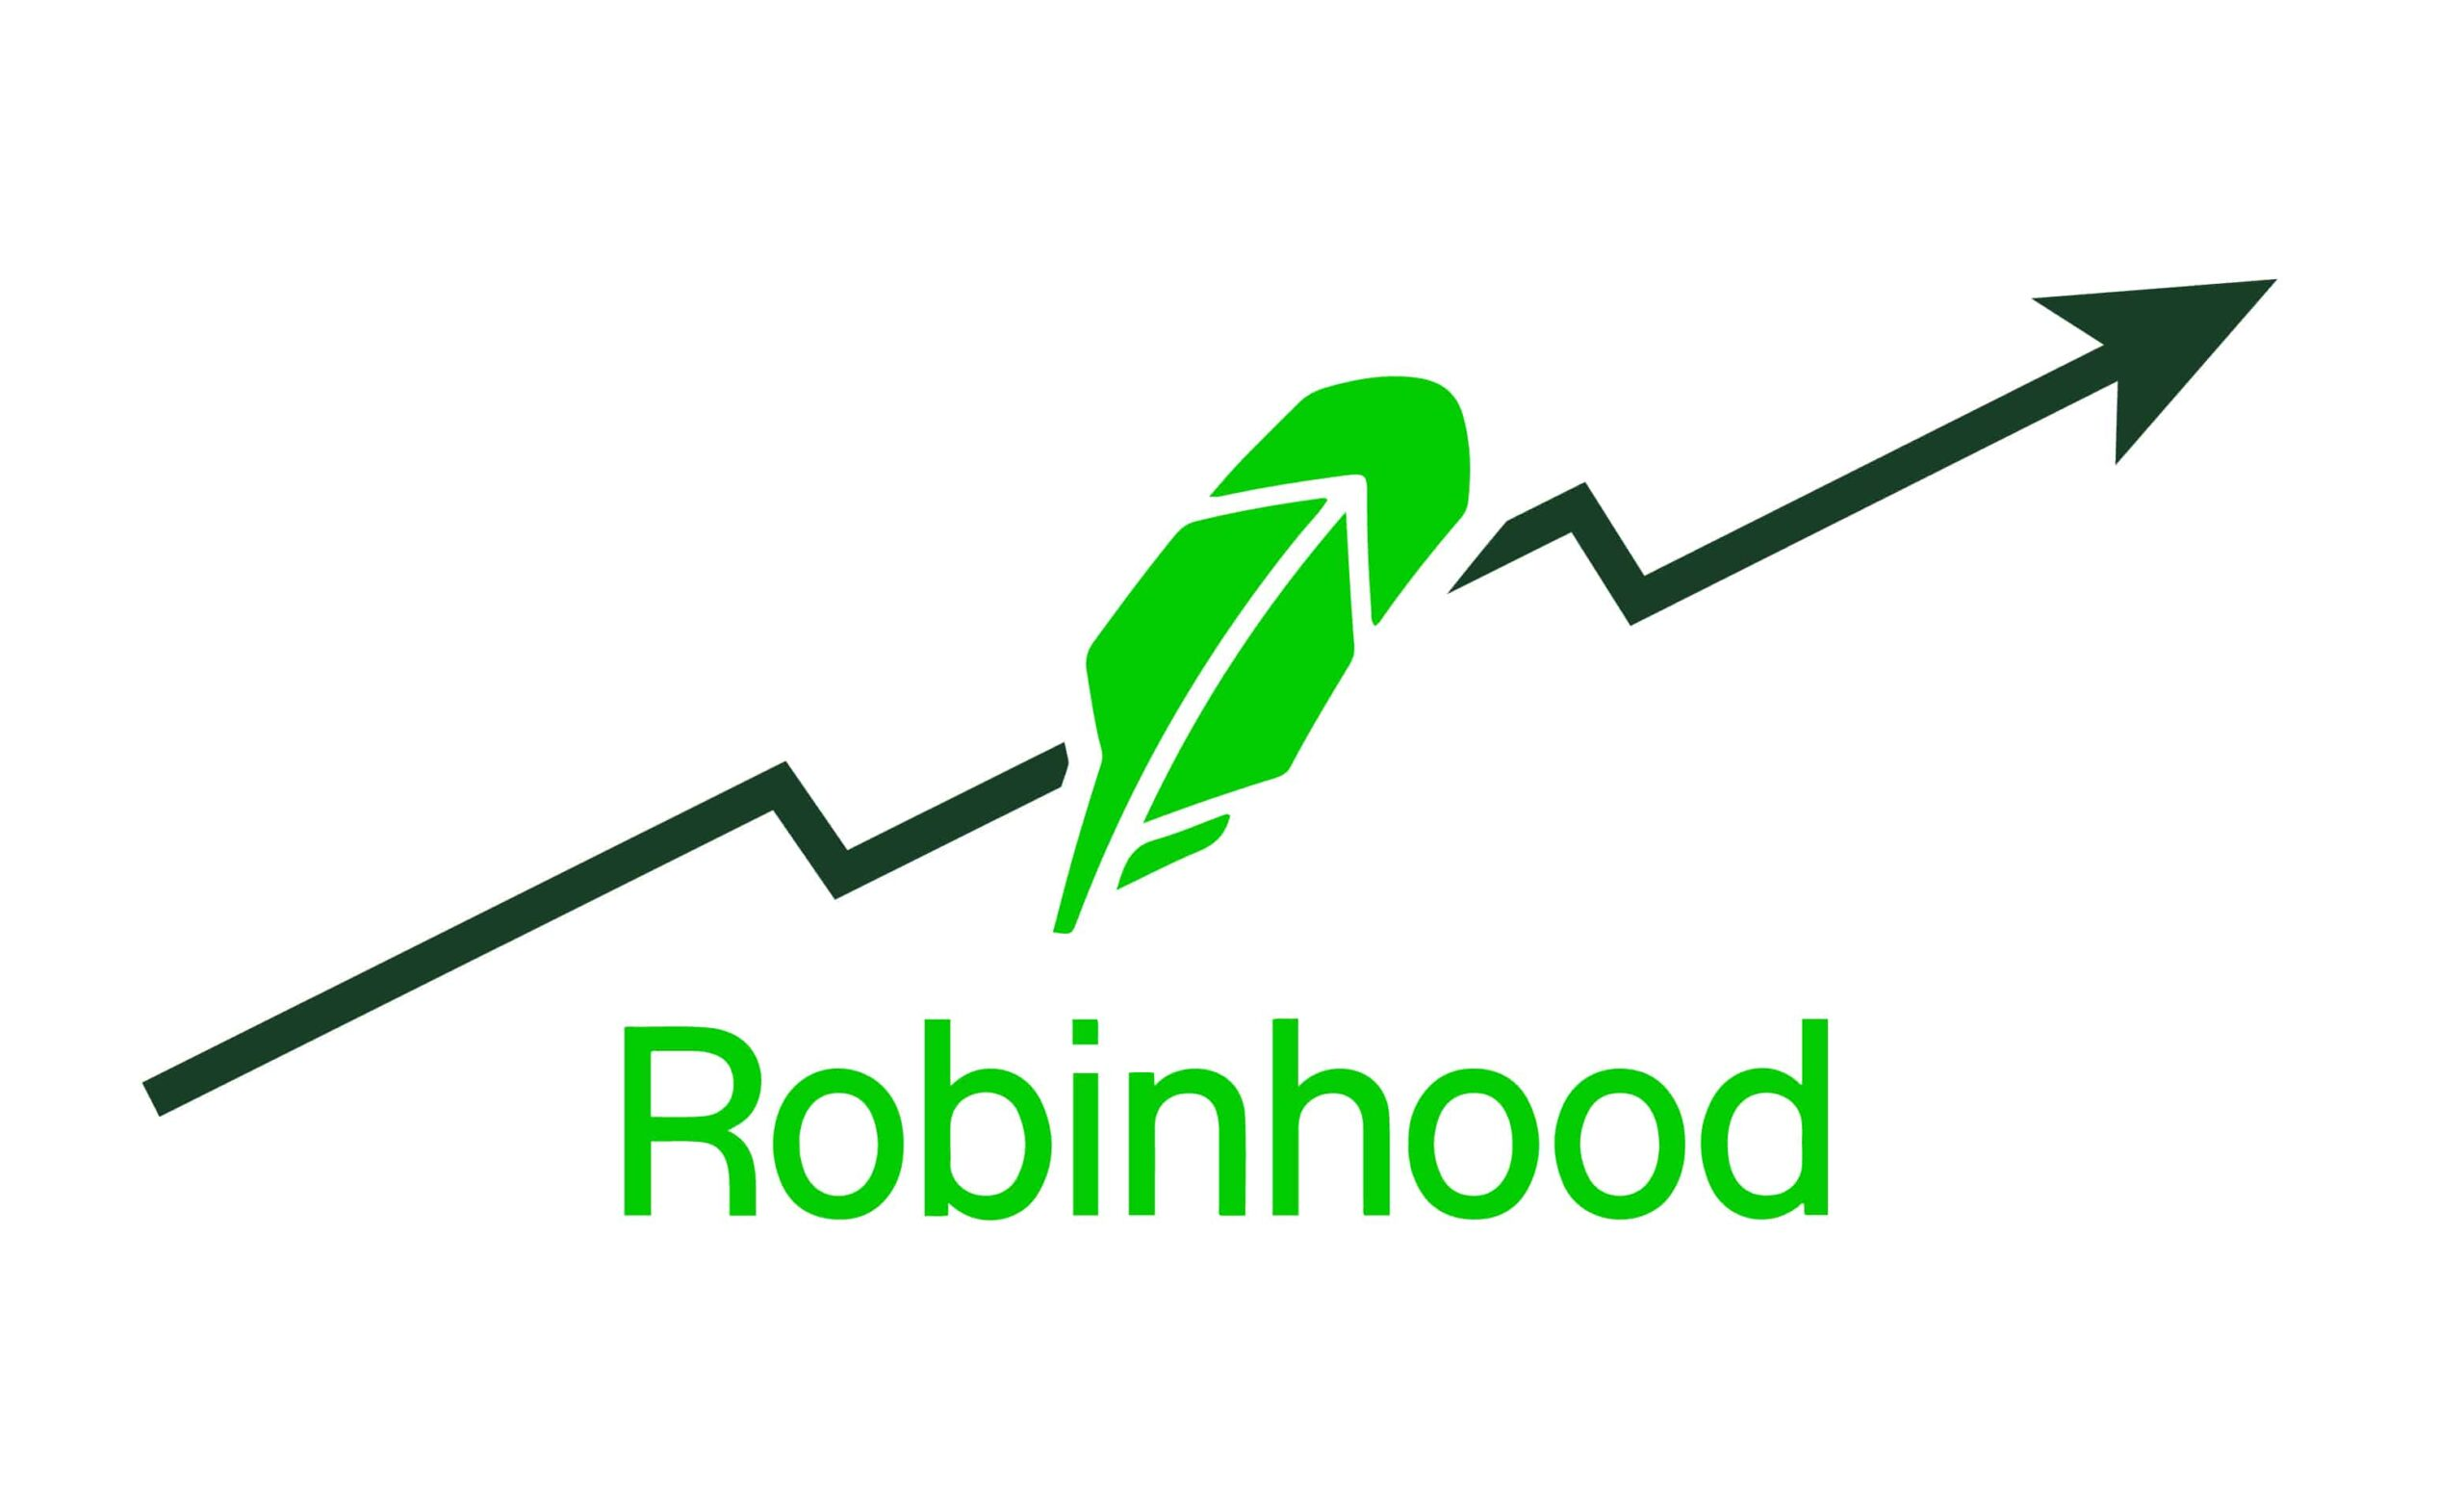 How Does Robinhood Work and Make Money?